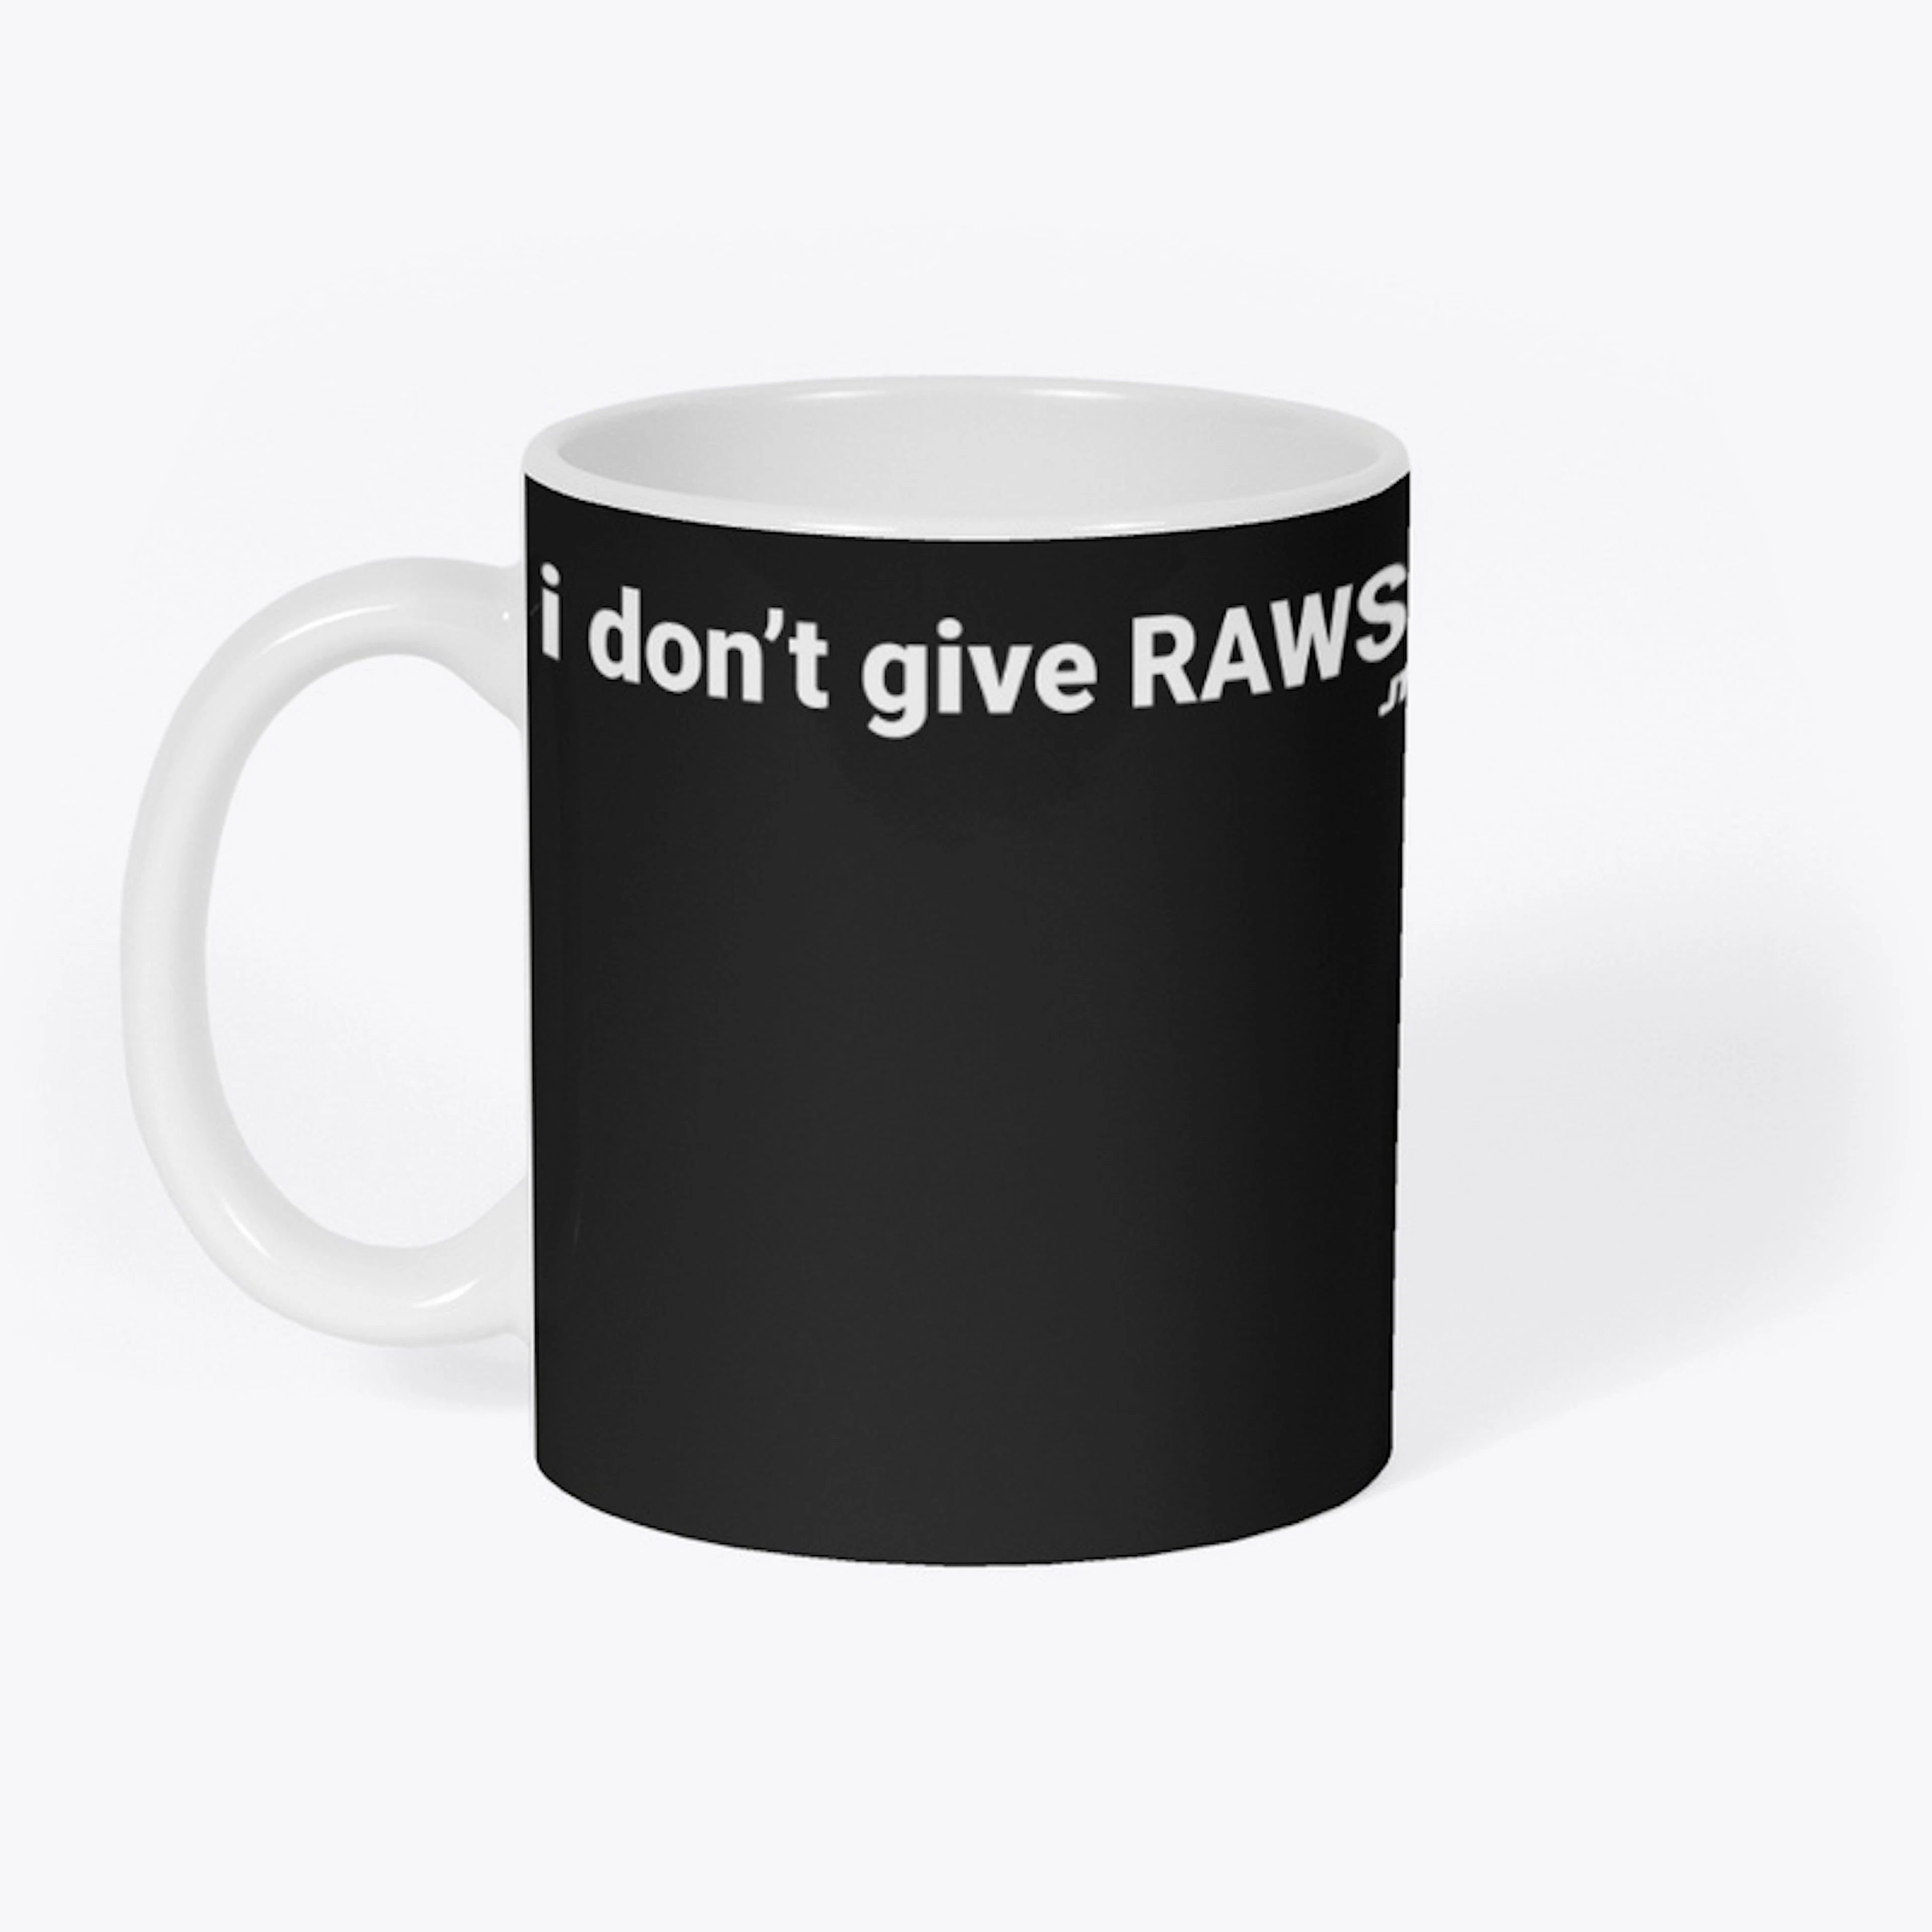 i don't give RAWS.